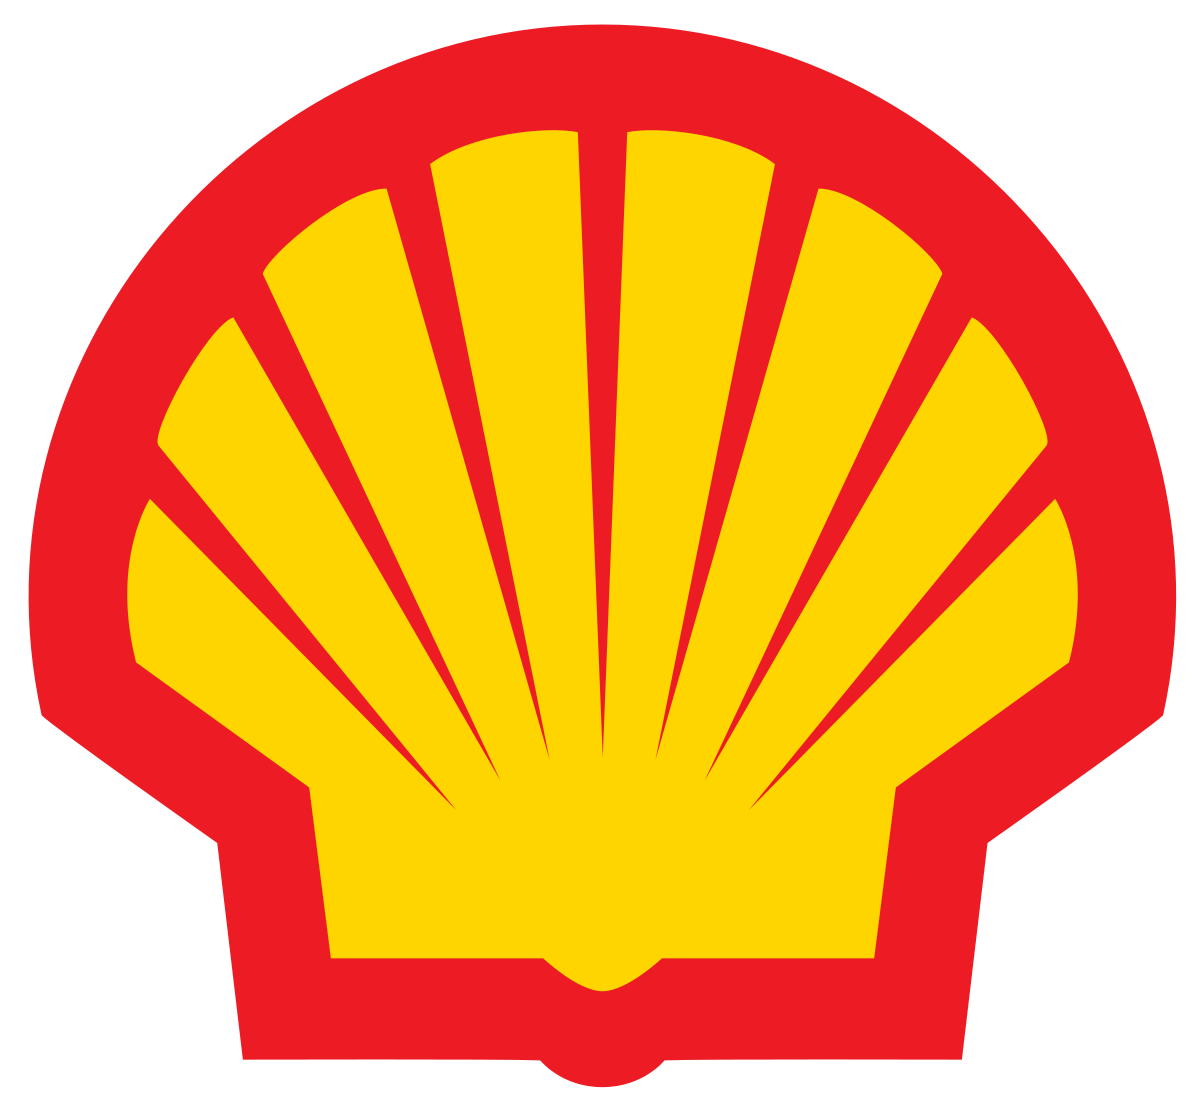 Shells wins UK Supreme Court in Nigerian oil spill case